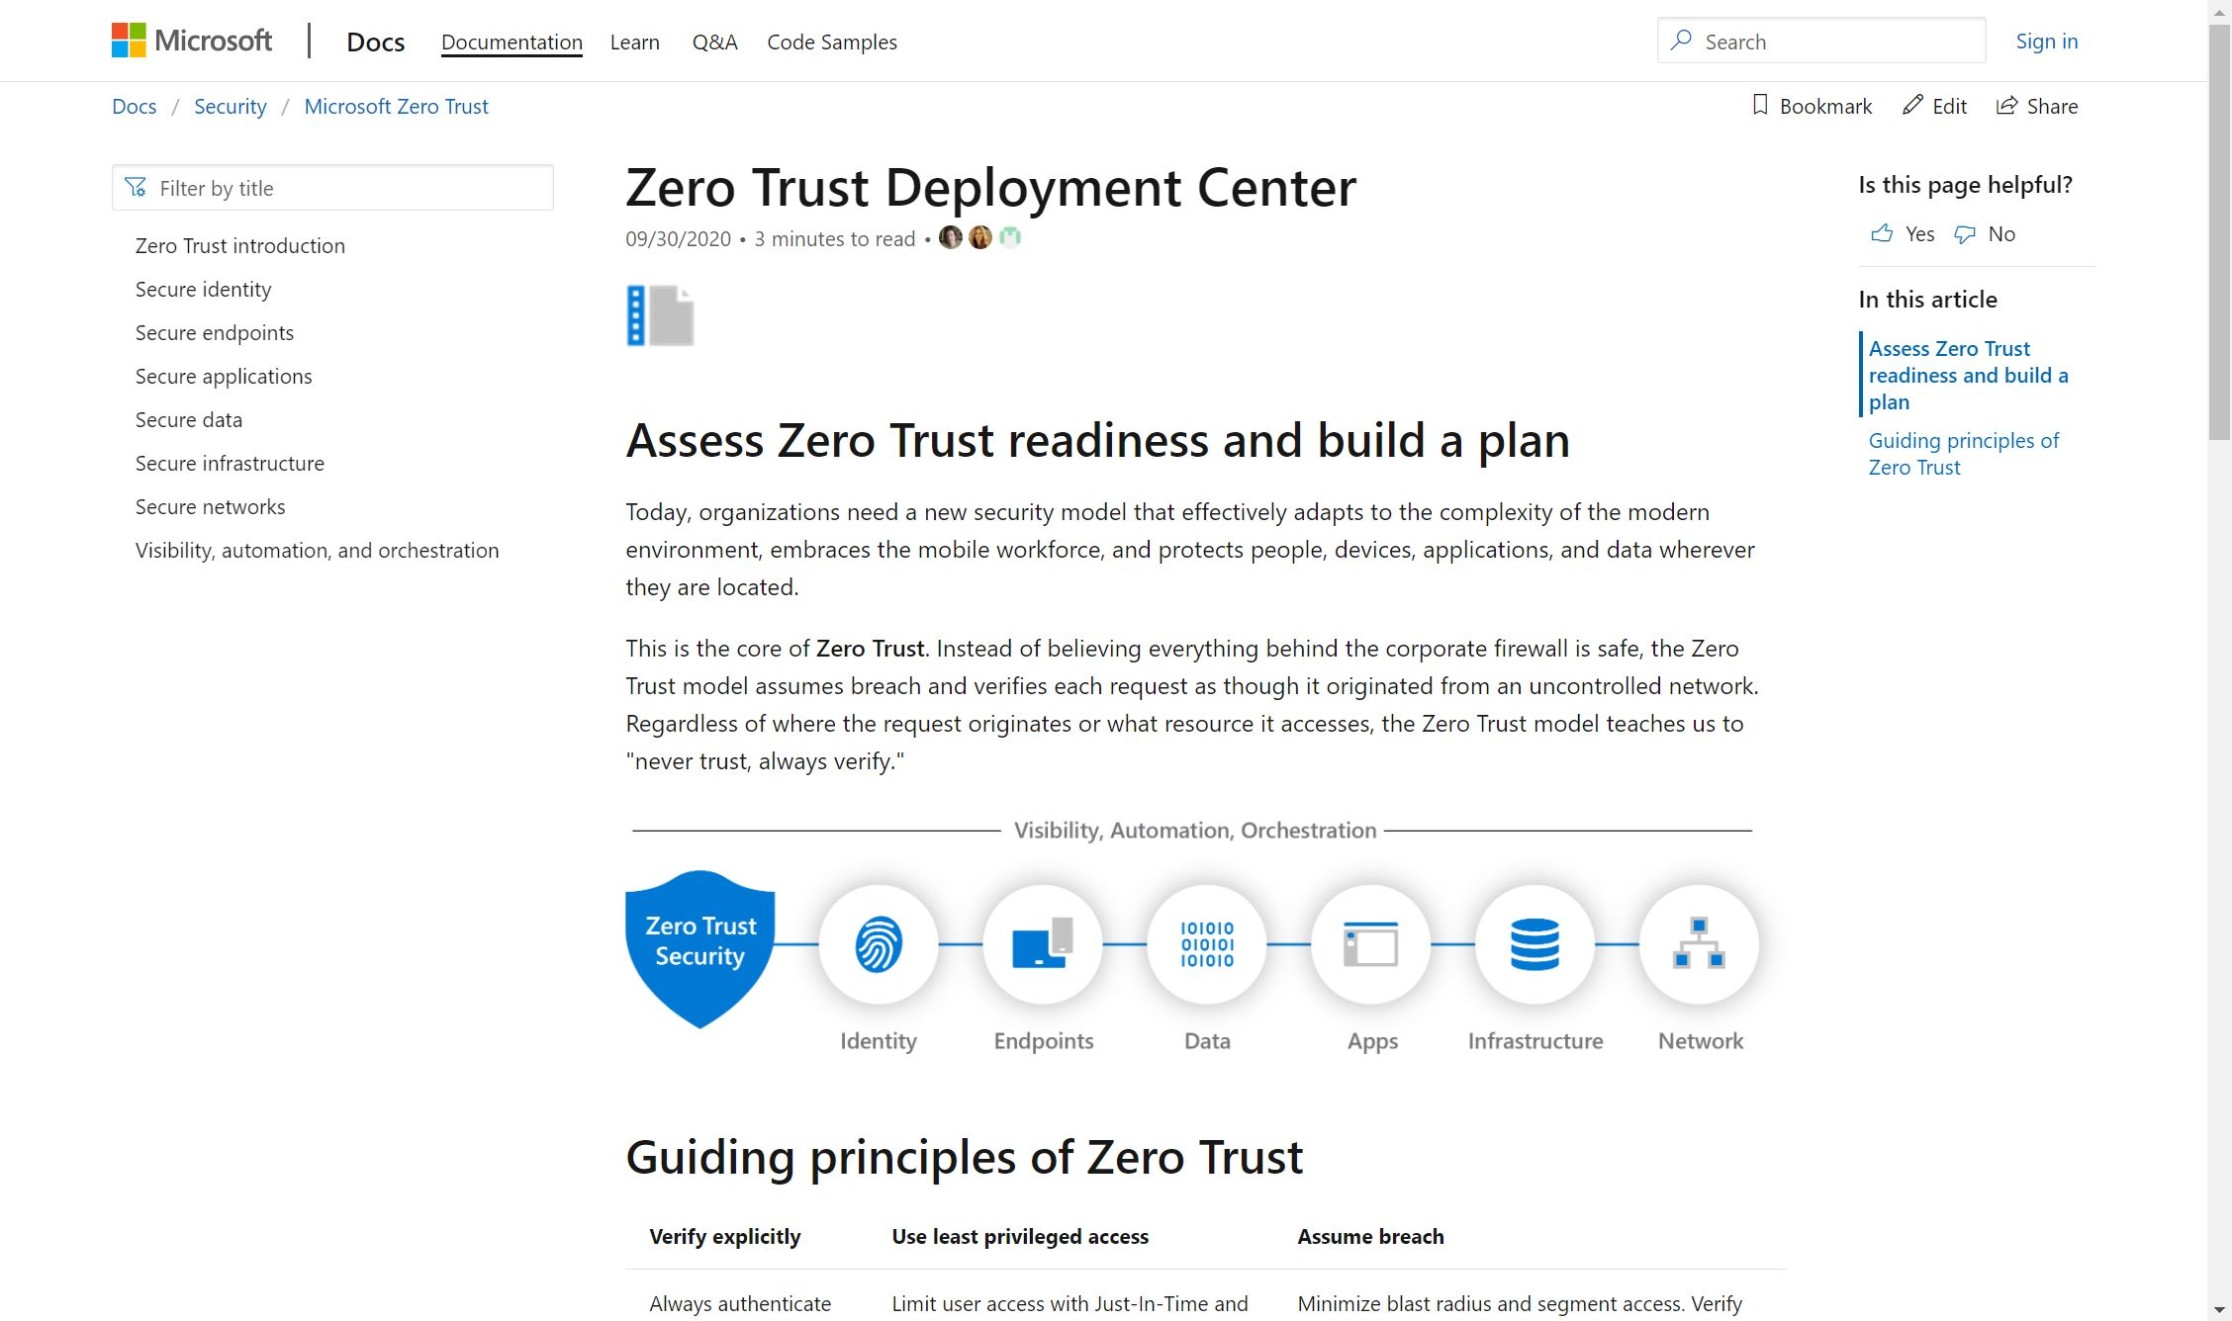 A screenshot of the Zero Trust Deployment Center web page